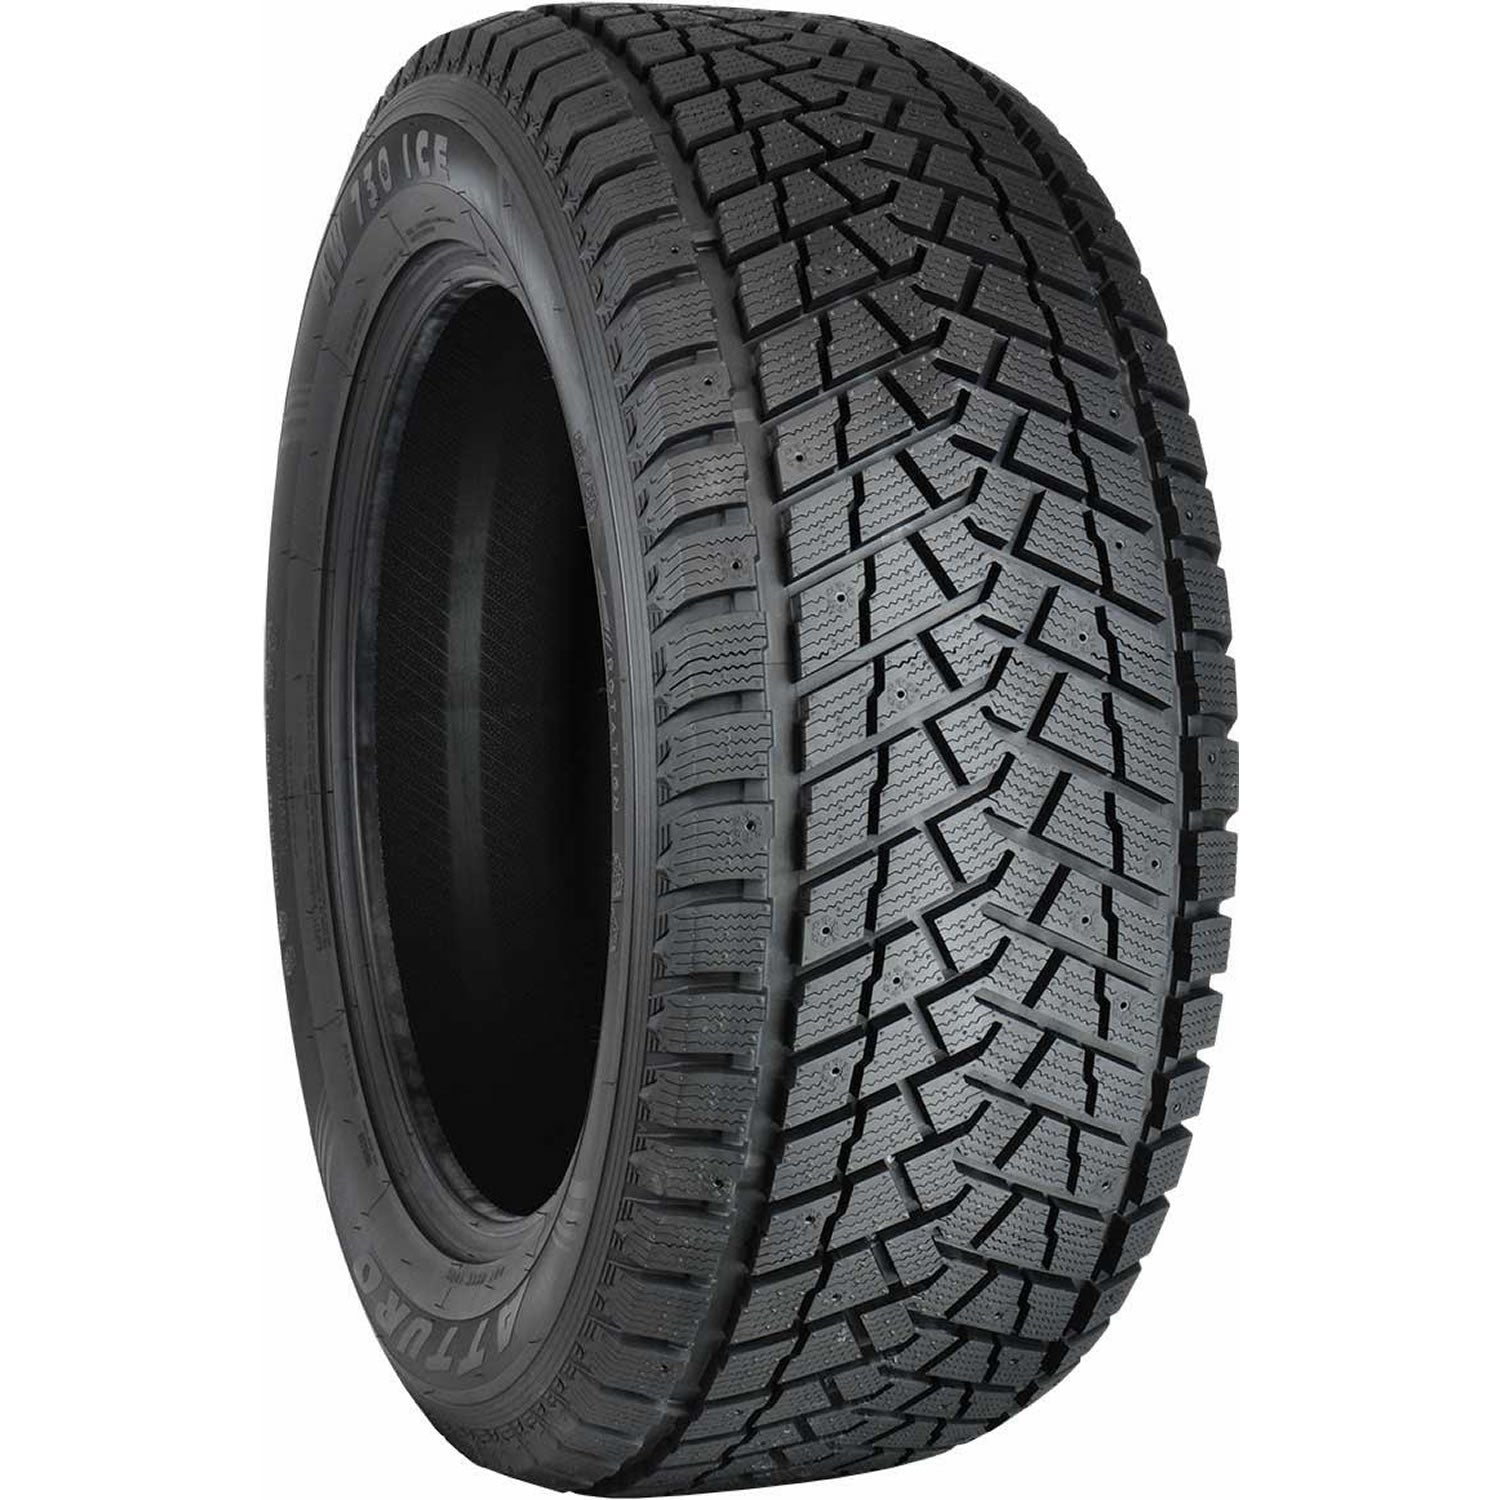 ATTURO AW730 ICE 235/70R16 (29.1X9.2R 16) Tires